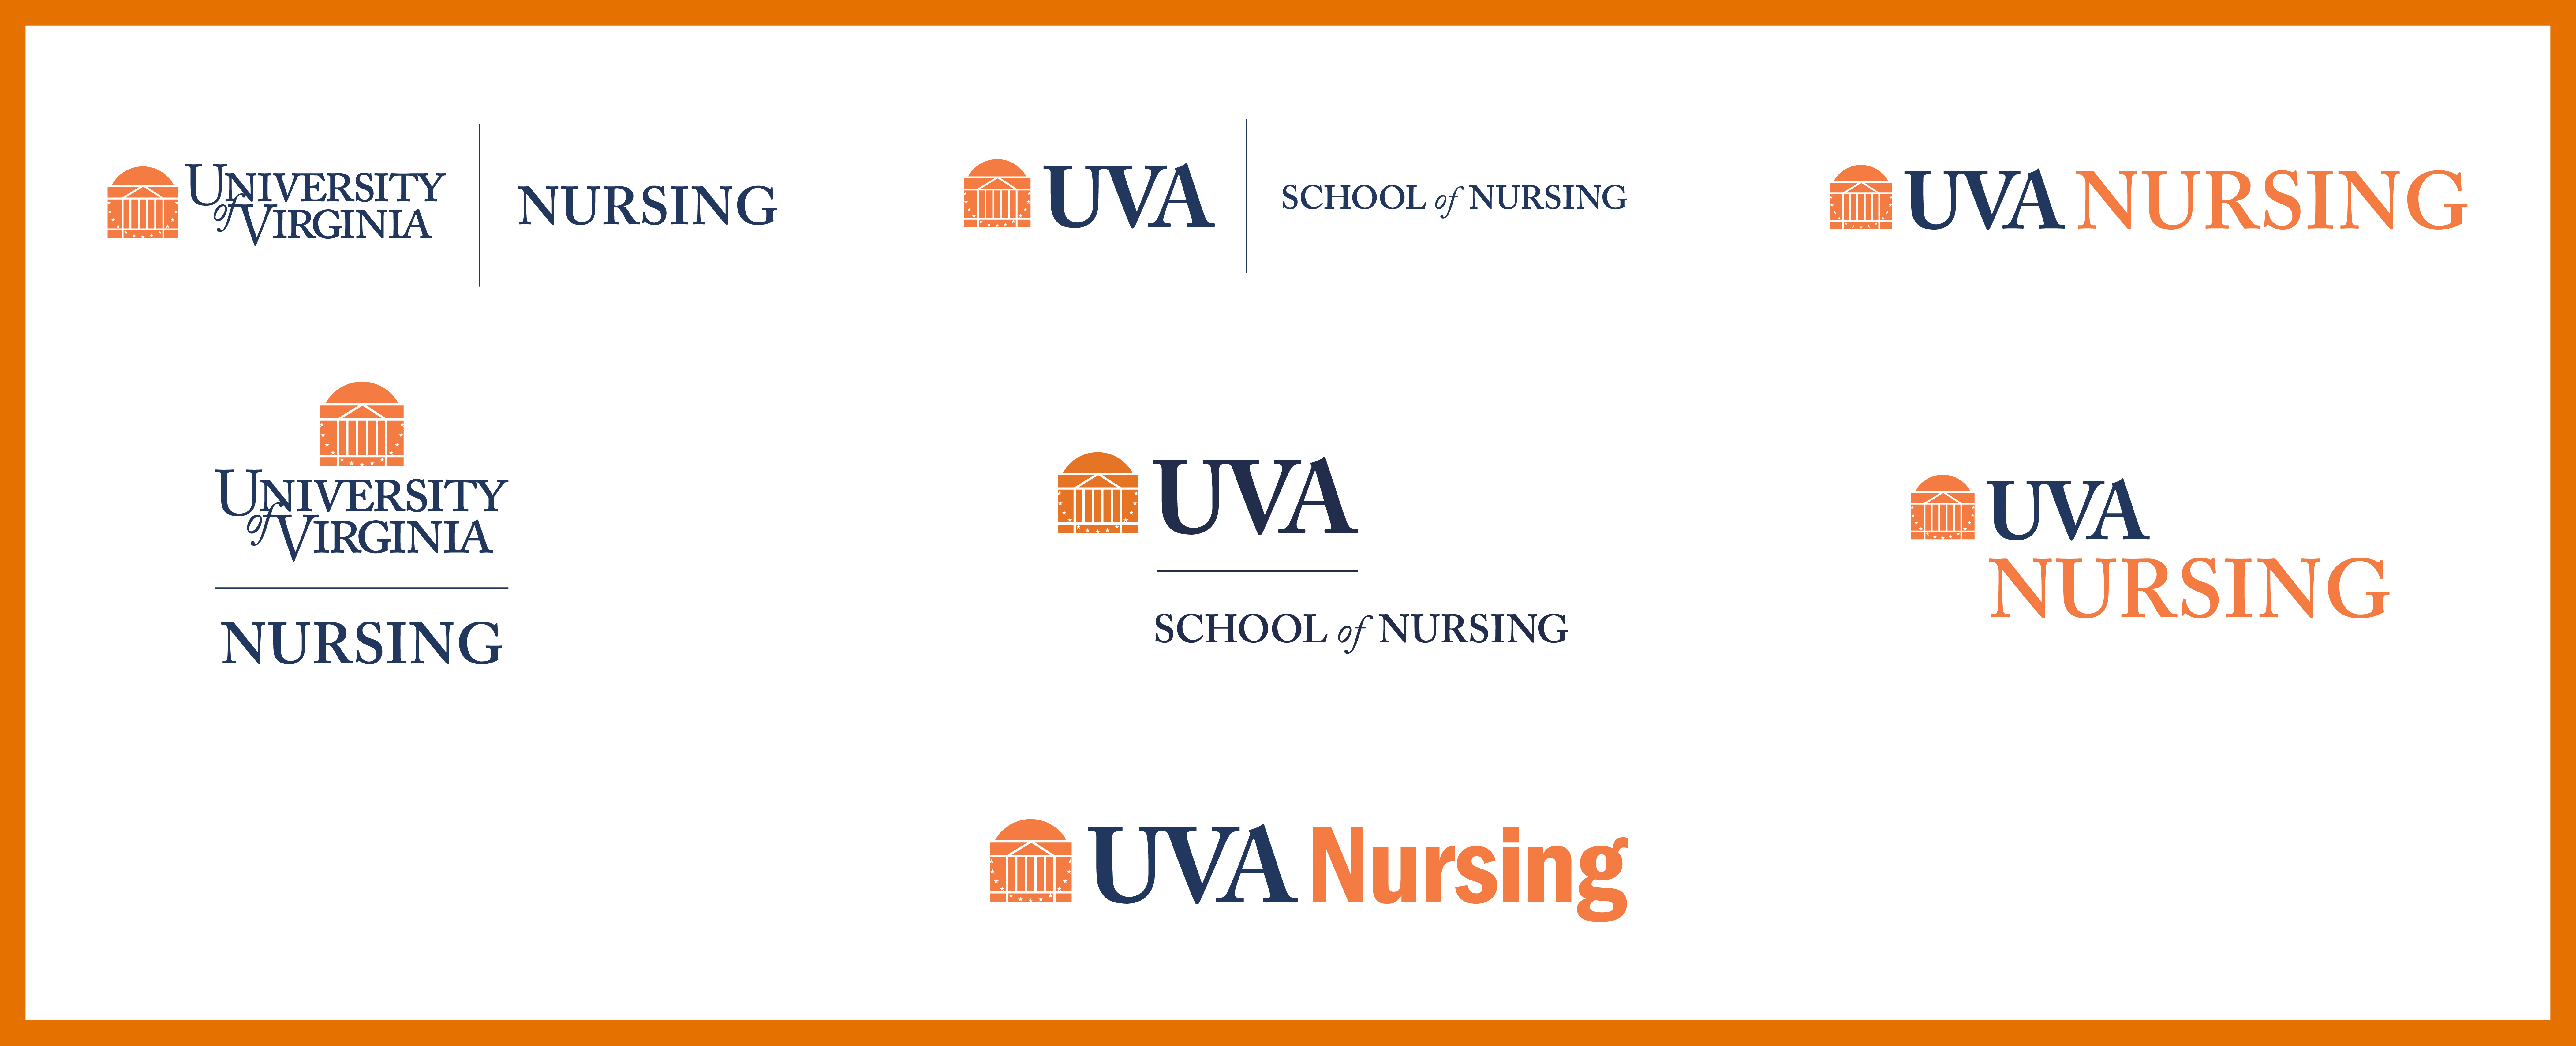 informal logos for the school of nursing.